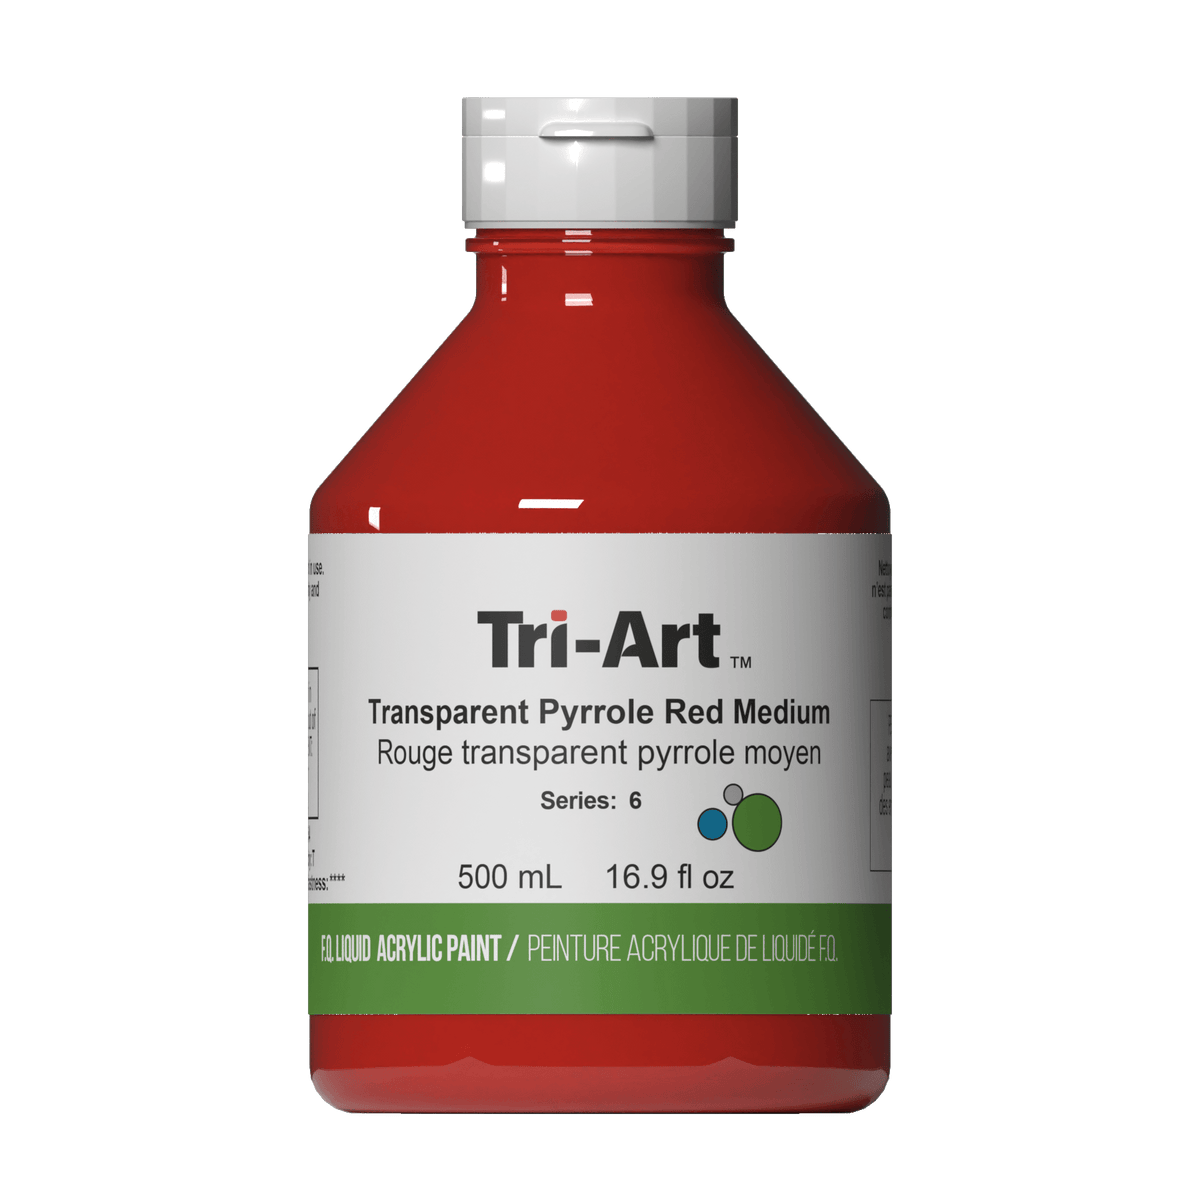 Tri-Art Liquids - Transparent Pyrrole Red Medium - Tri-Art Mfg.